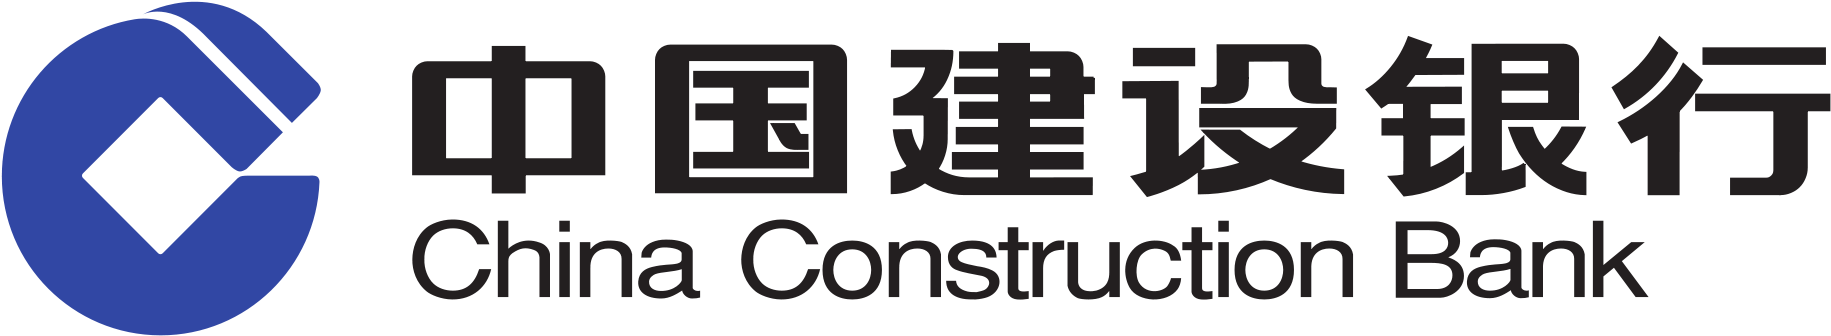 China Construction Logo Designs - China Construction Bank Corporation Logo (1024x259), Png Download